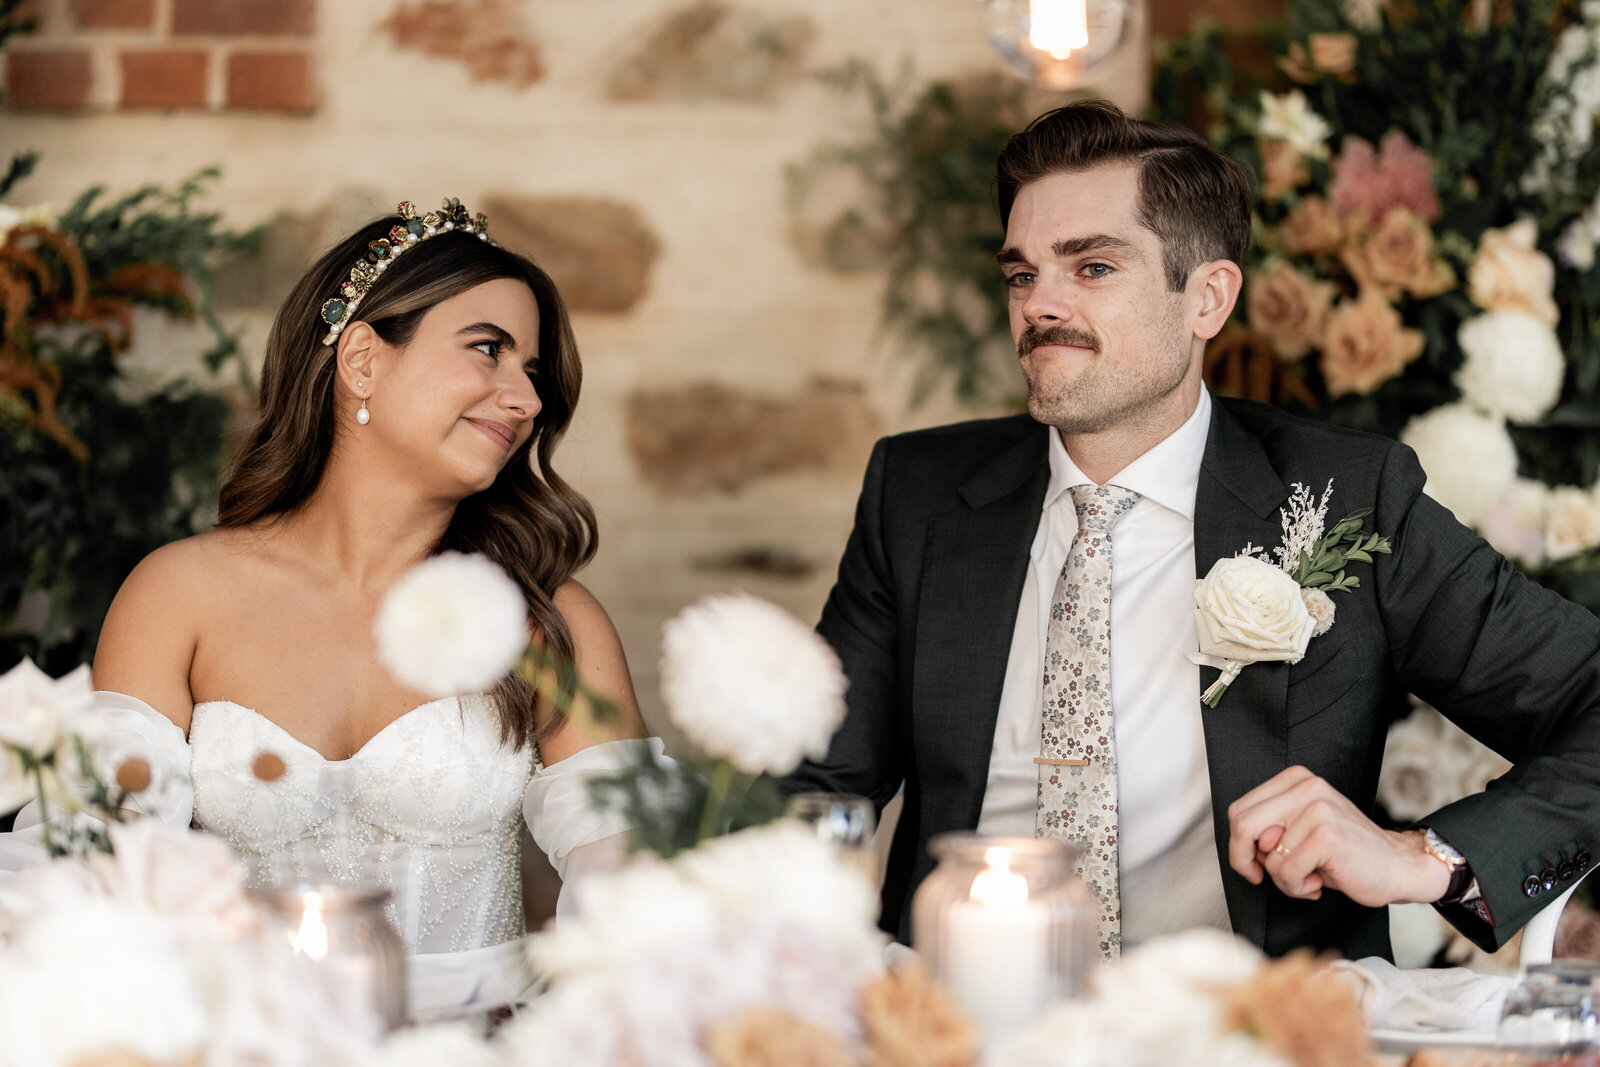 Parmida-Charlie-Adelaide-Wedding-Photographer-Rexvil-Photography-840